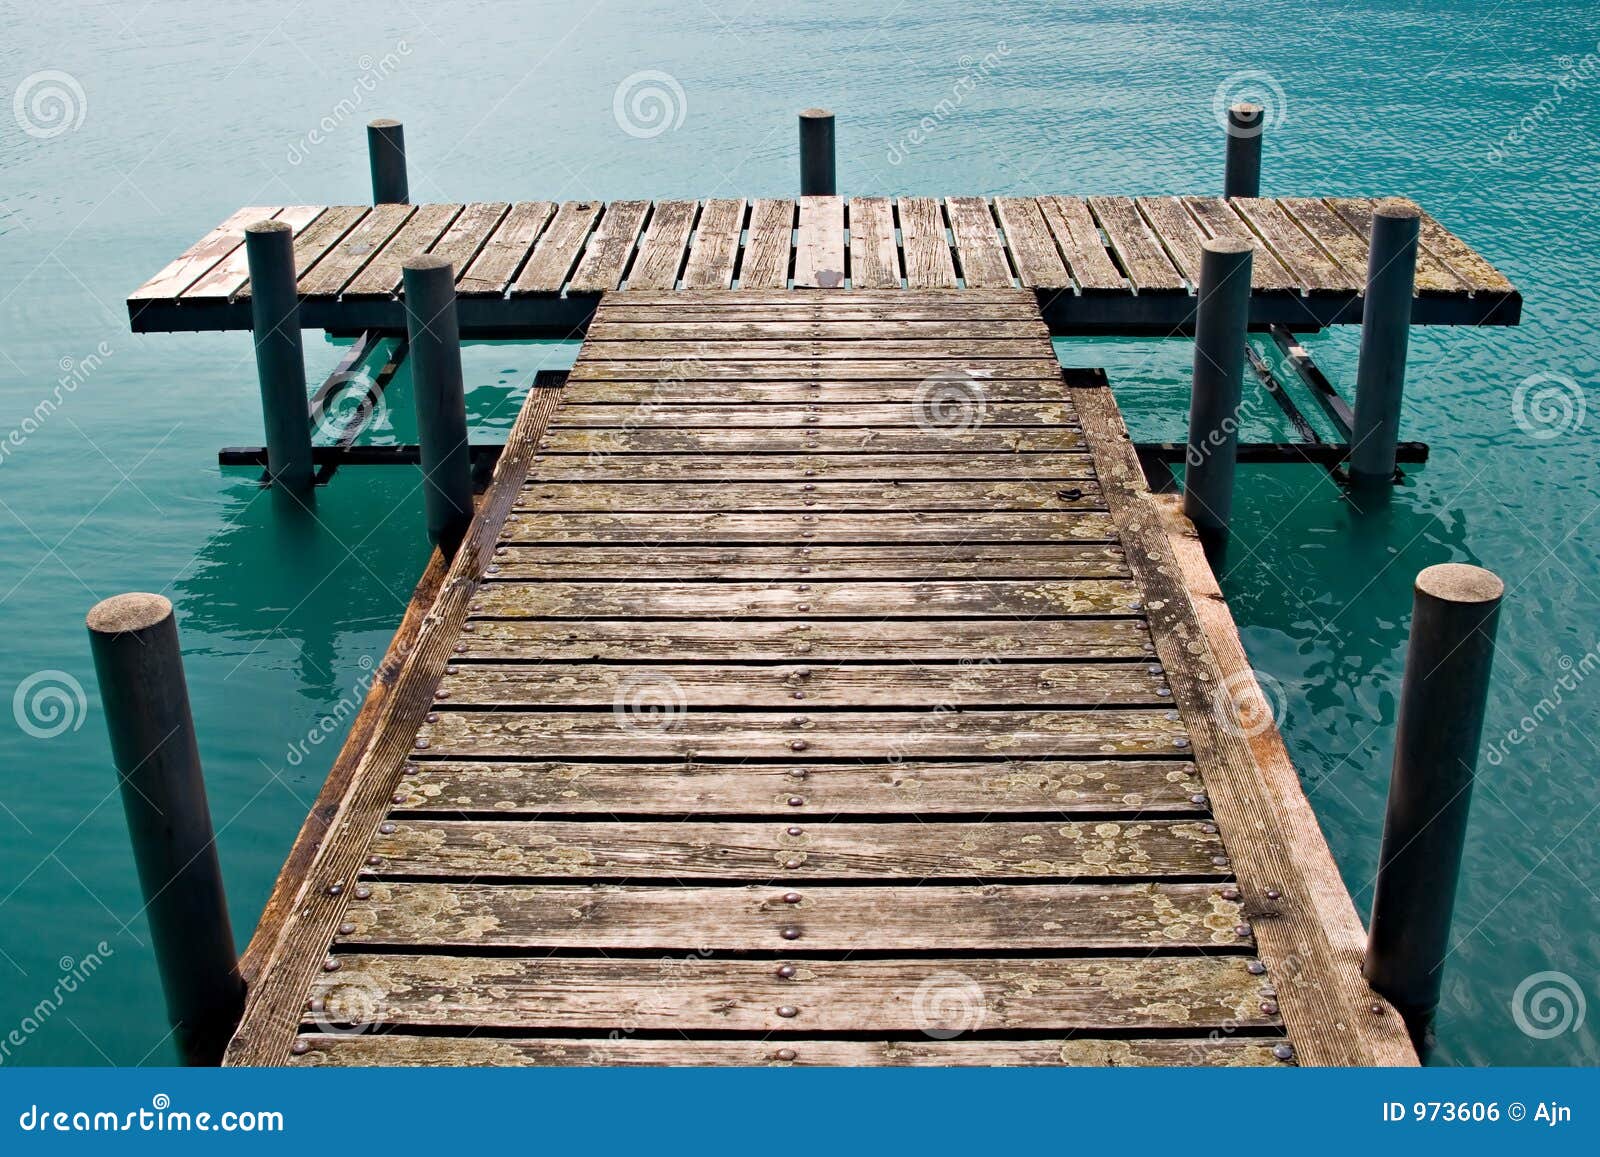 clipart boat dock - photo #9